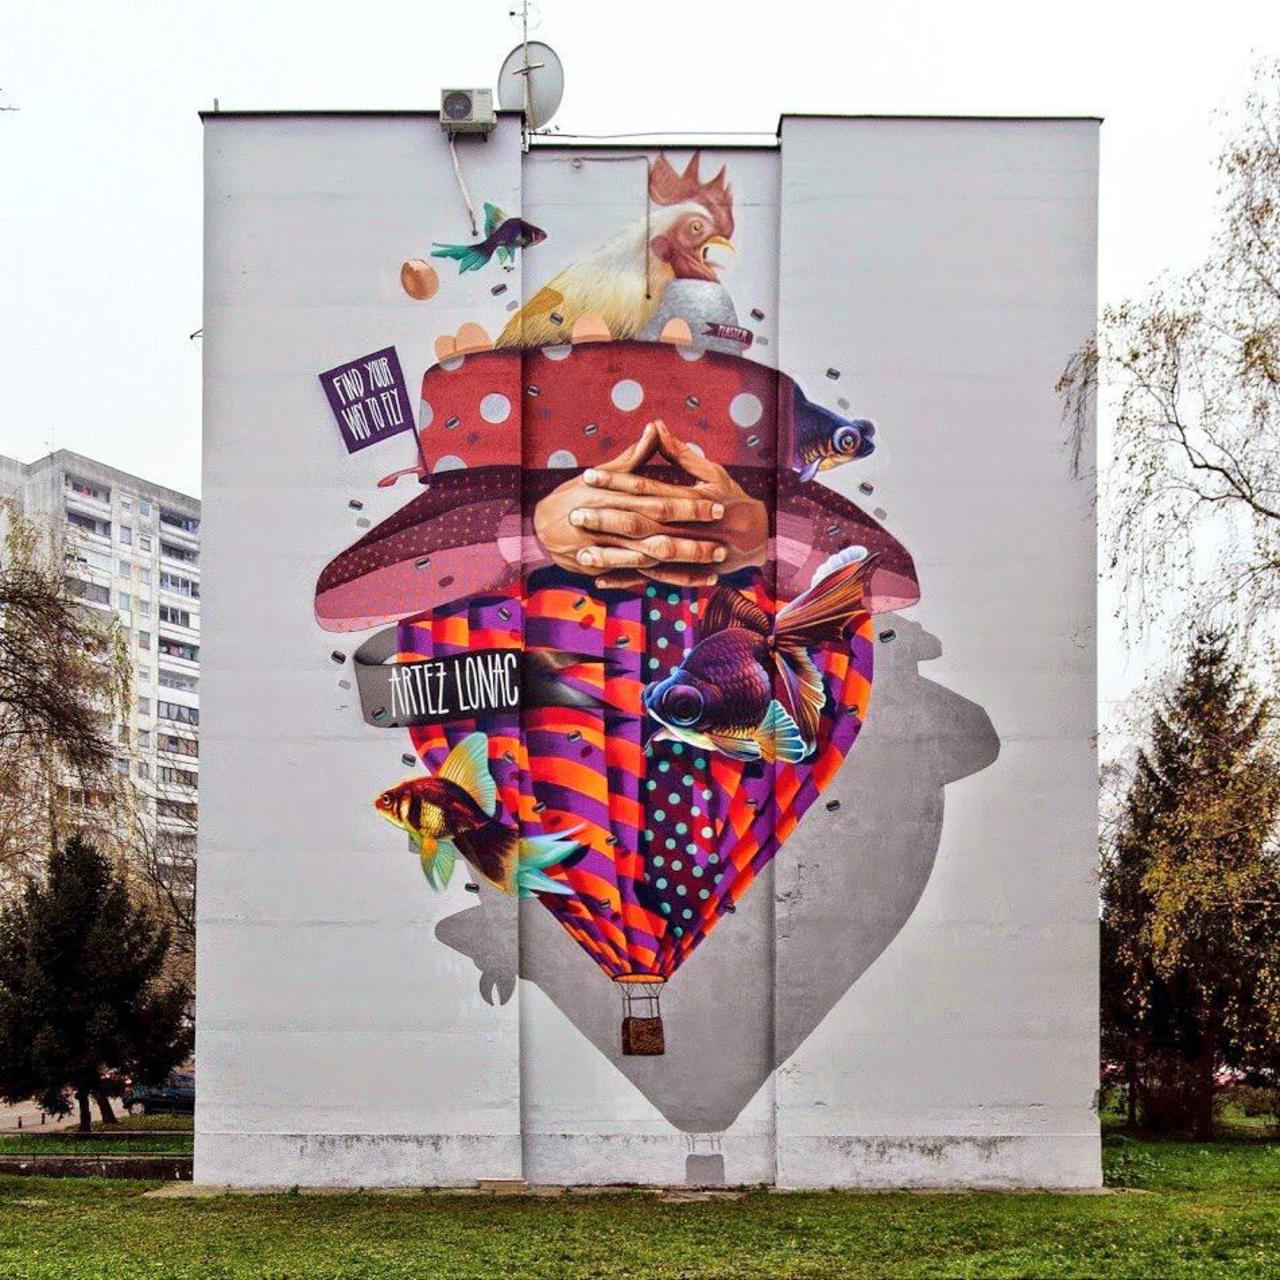 Lonac & Artez 
Banja Luka, Bosnia
#streetart #art #graffiti #mural http://t.co/dZ4wck8miM